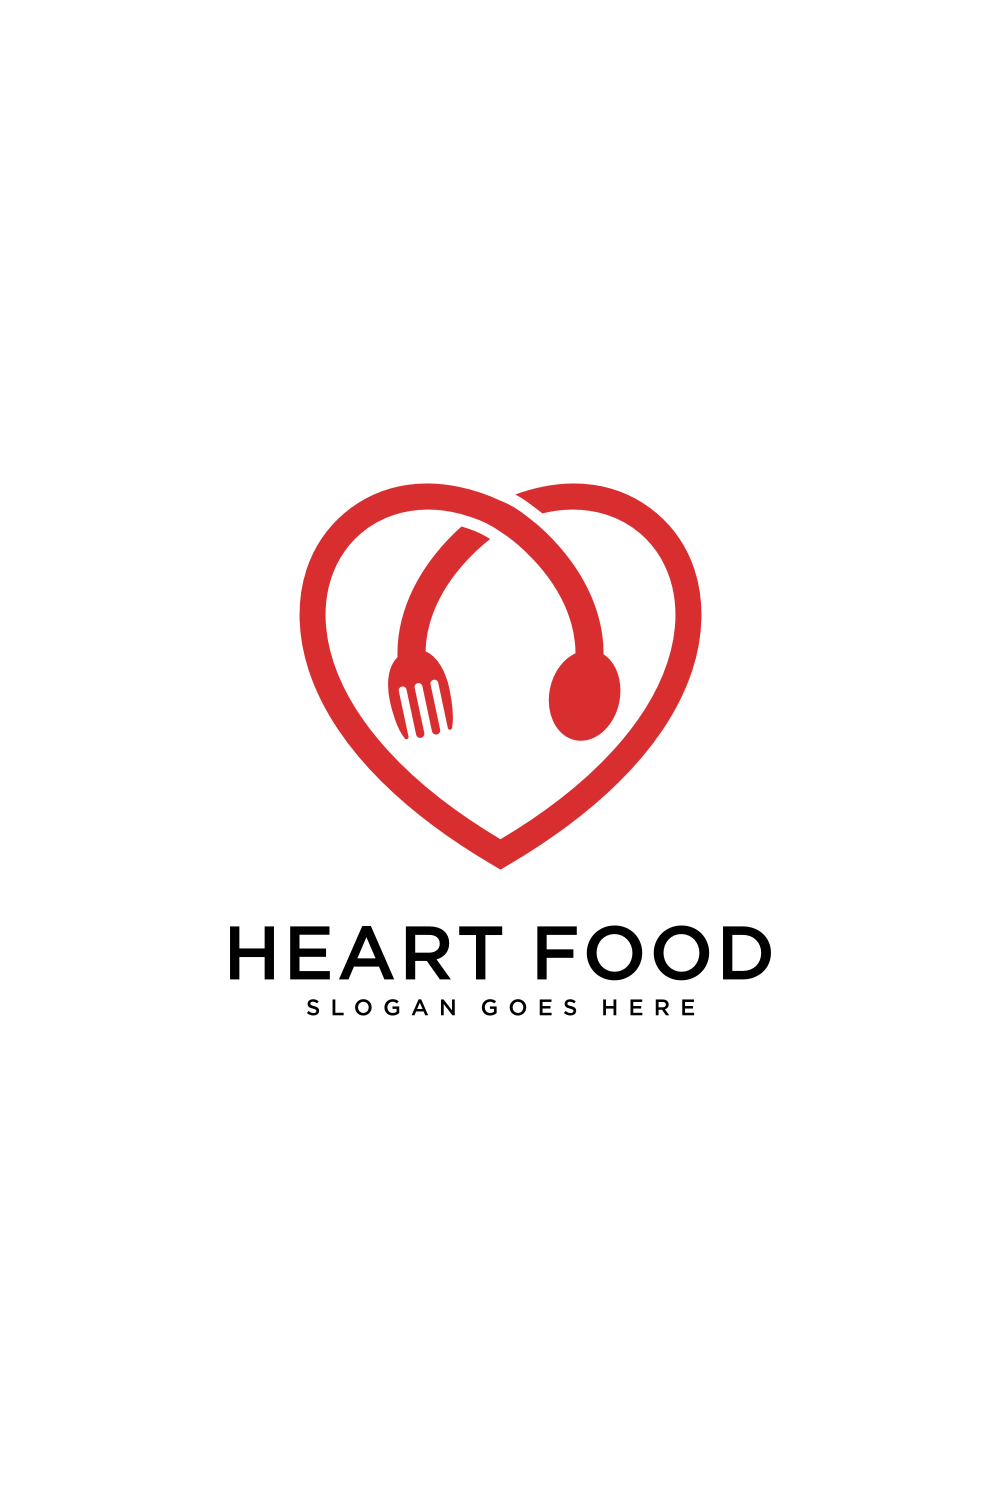 Heart Food Logo Design Vector pinterest image.